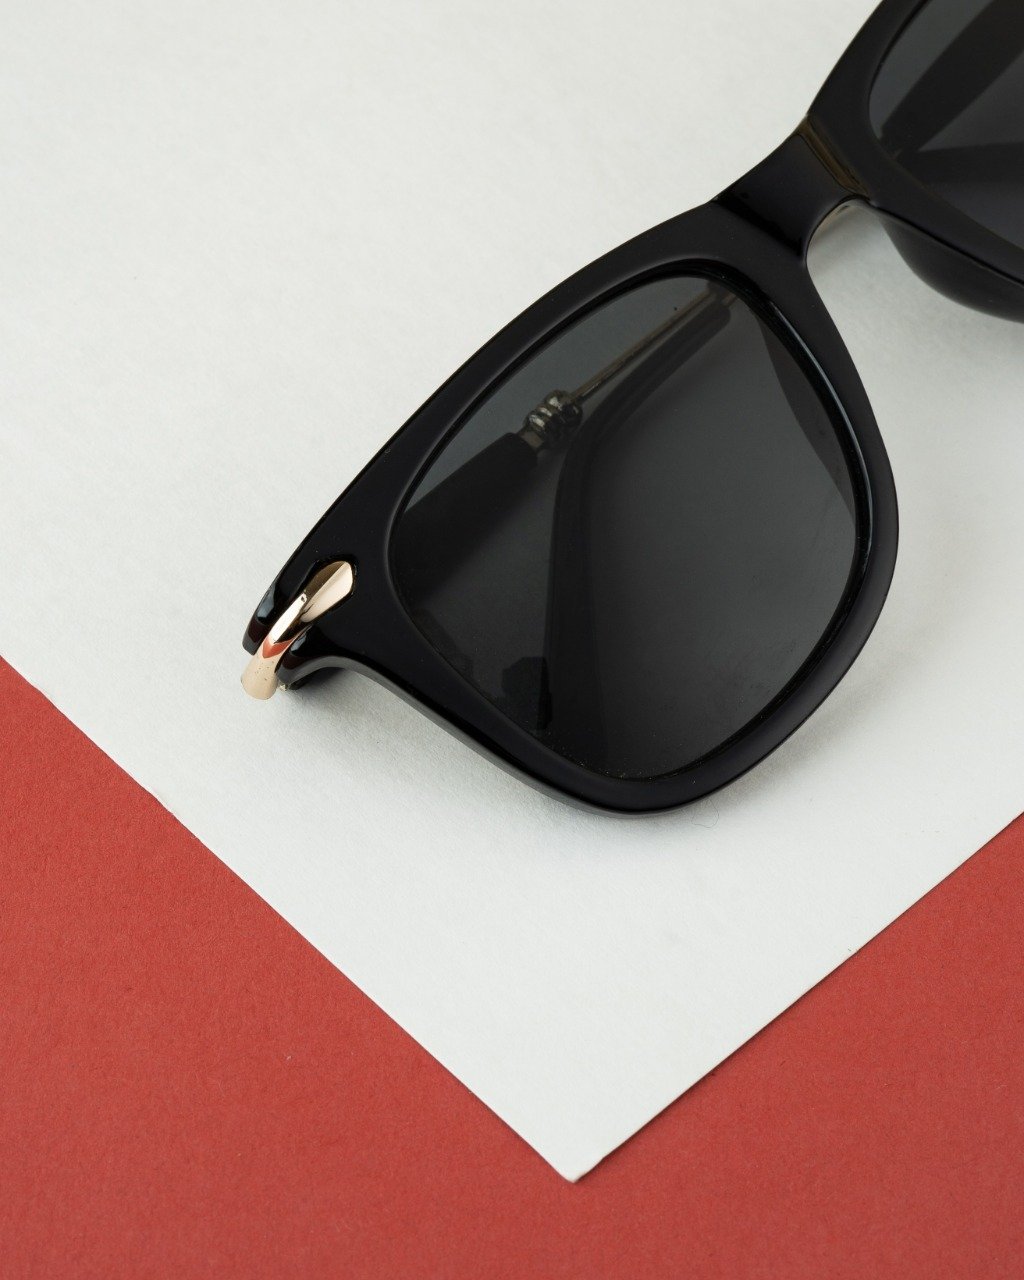 Classy Cory Gold And black Edition Sunglasses